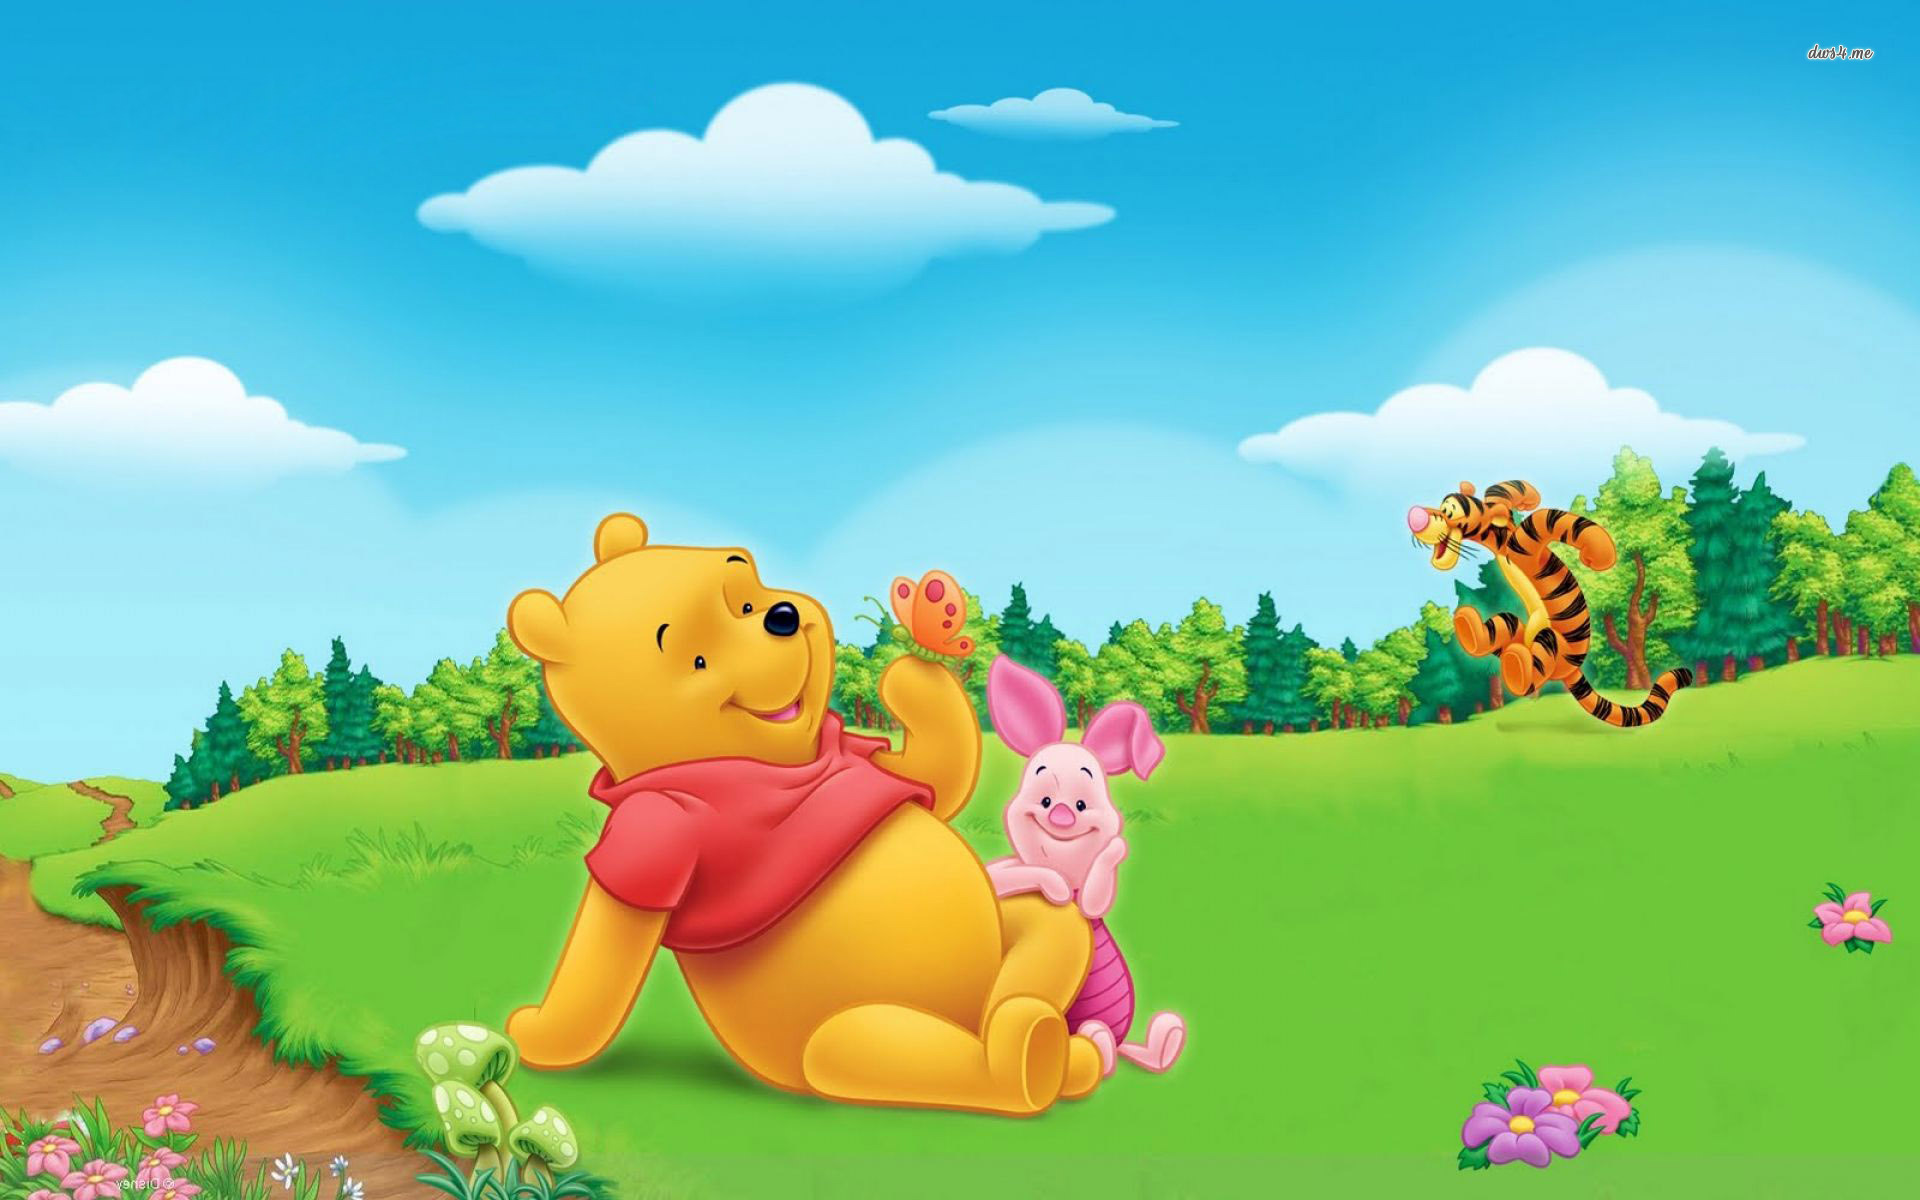  Disney Cartoon Winnie The Pooh Wallpaper HD SiWallpaperHD